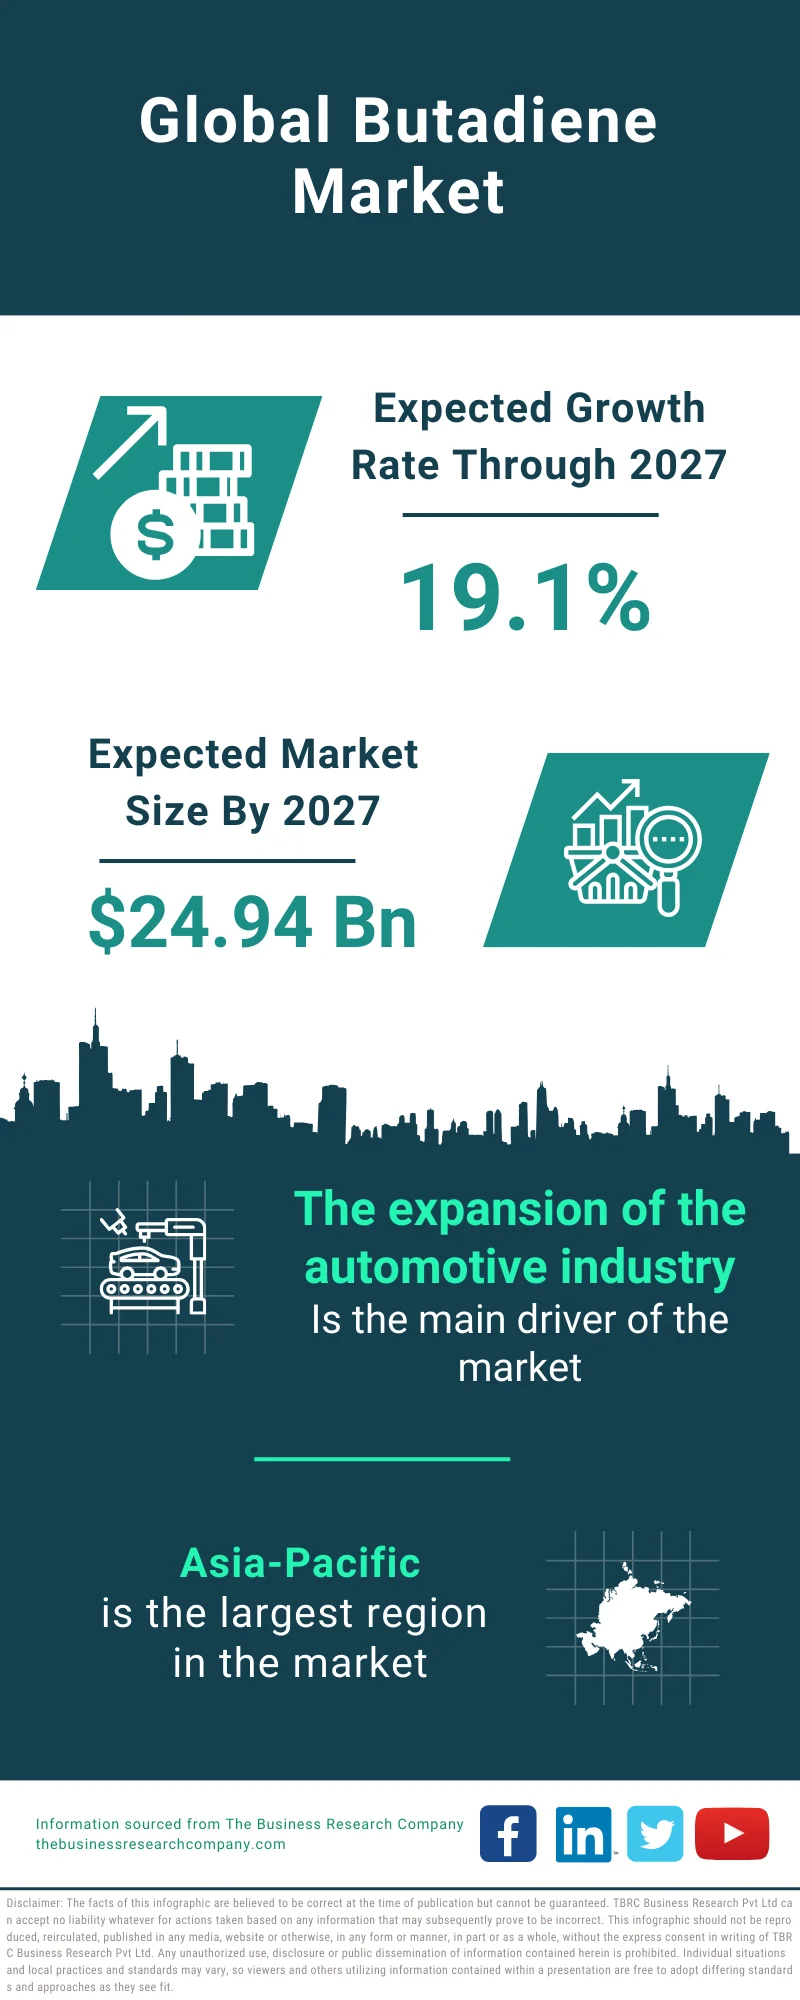 Butadiene Global Market Report 2023